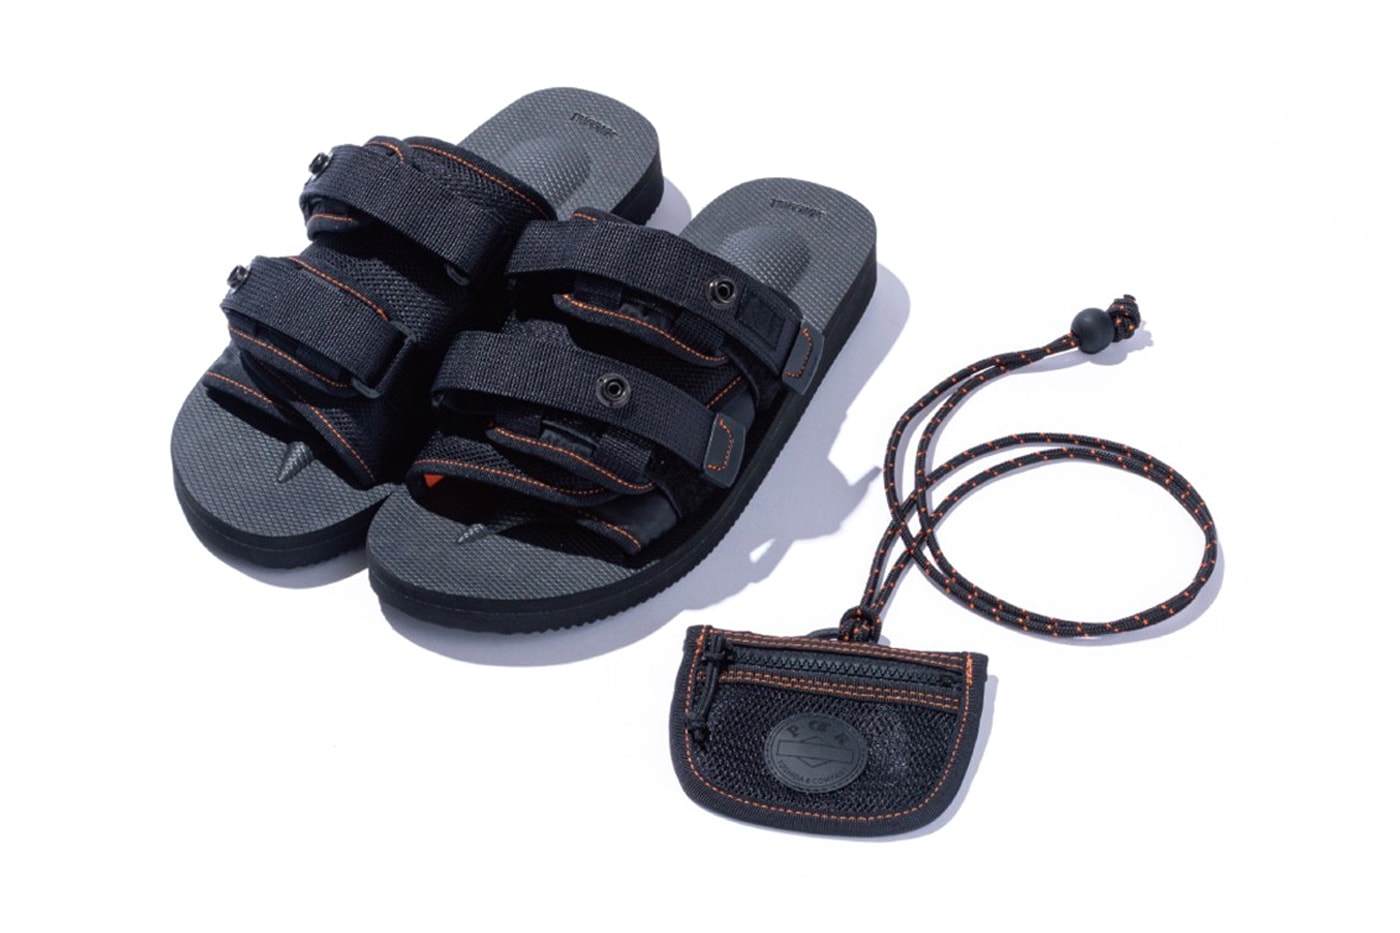 Suicoke Moto Cab Sandals black orange collaboration side pocket bag slip on summer pouch release info date price